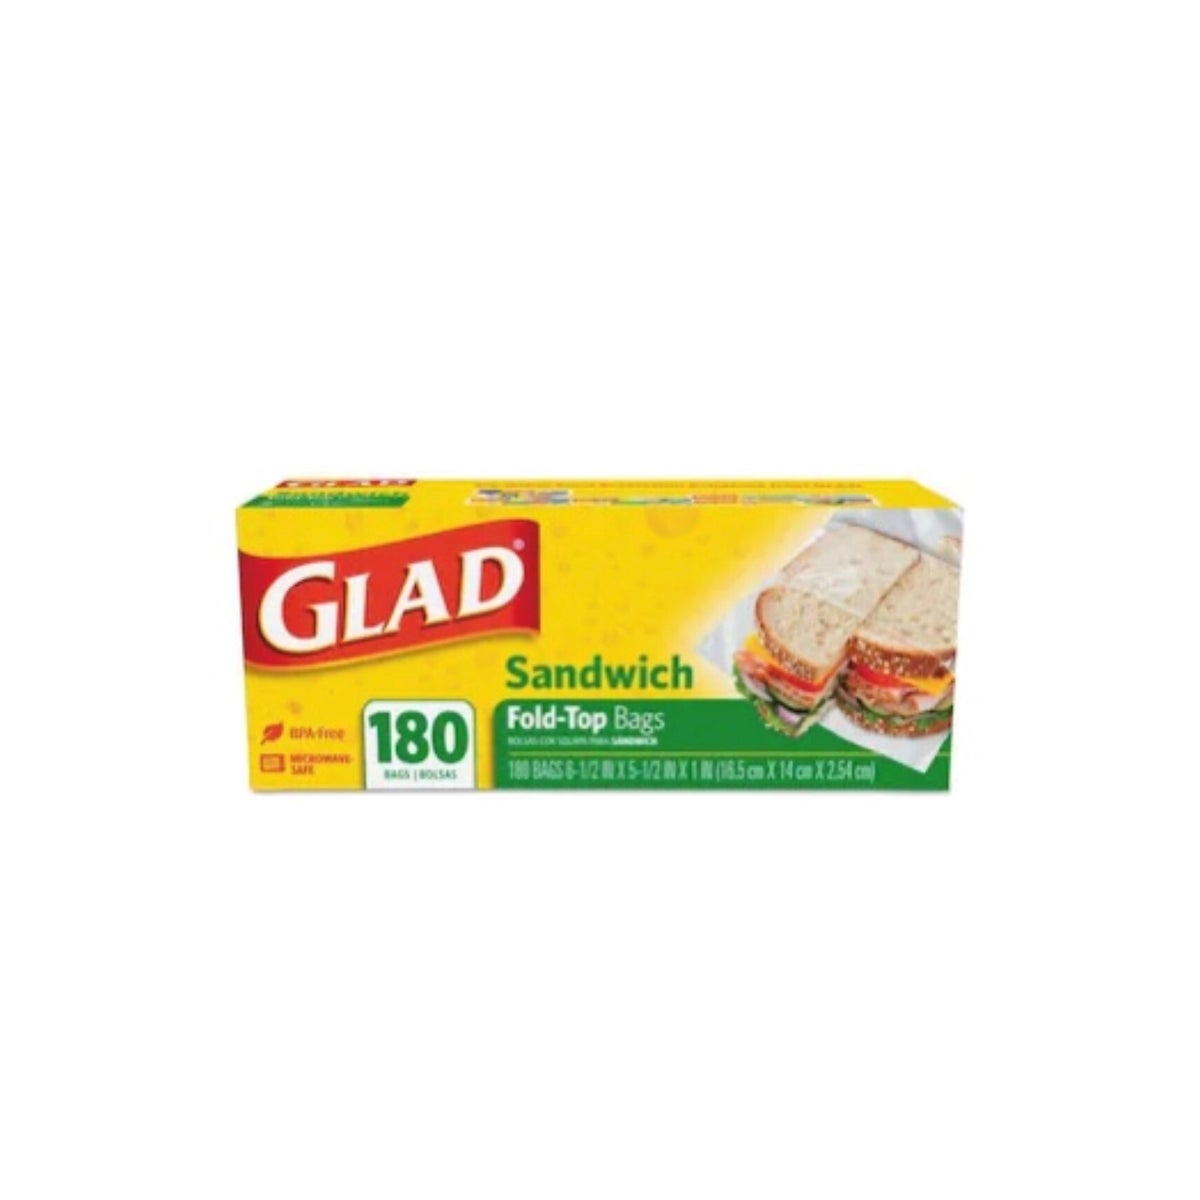 GLAD SANDWICH BAGS 12/180CT